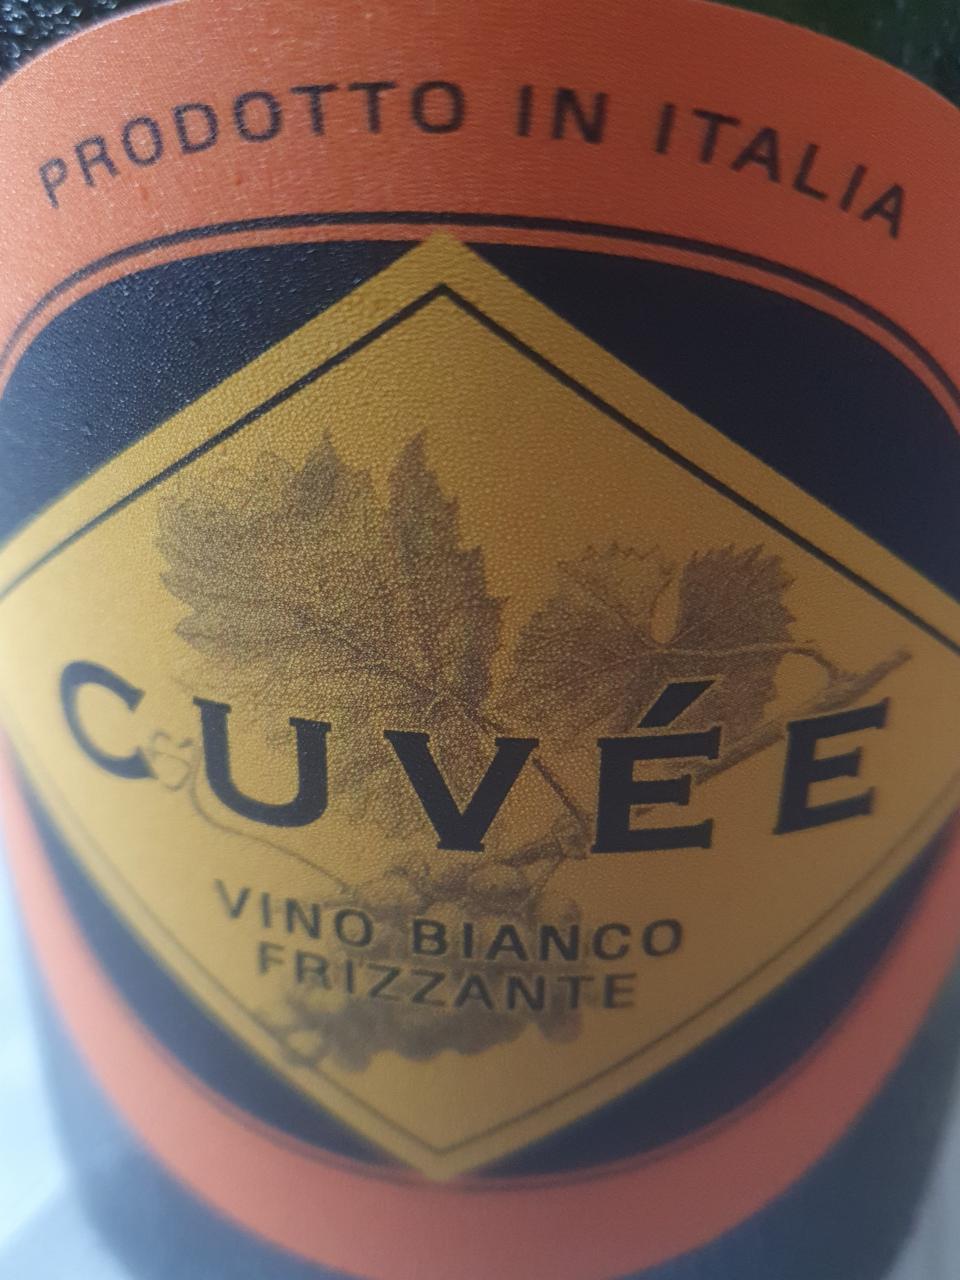 Fotografie - Cuvée Vino Bianco Frizzante